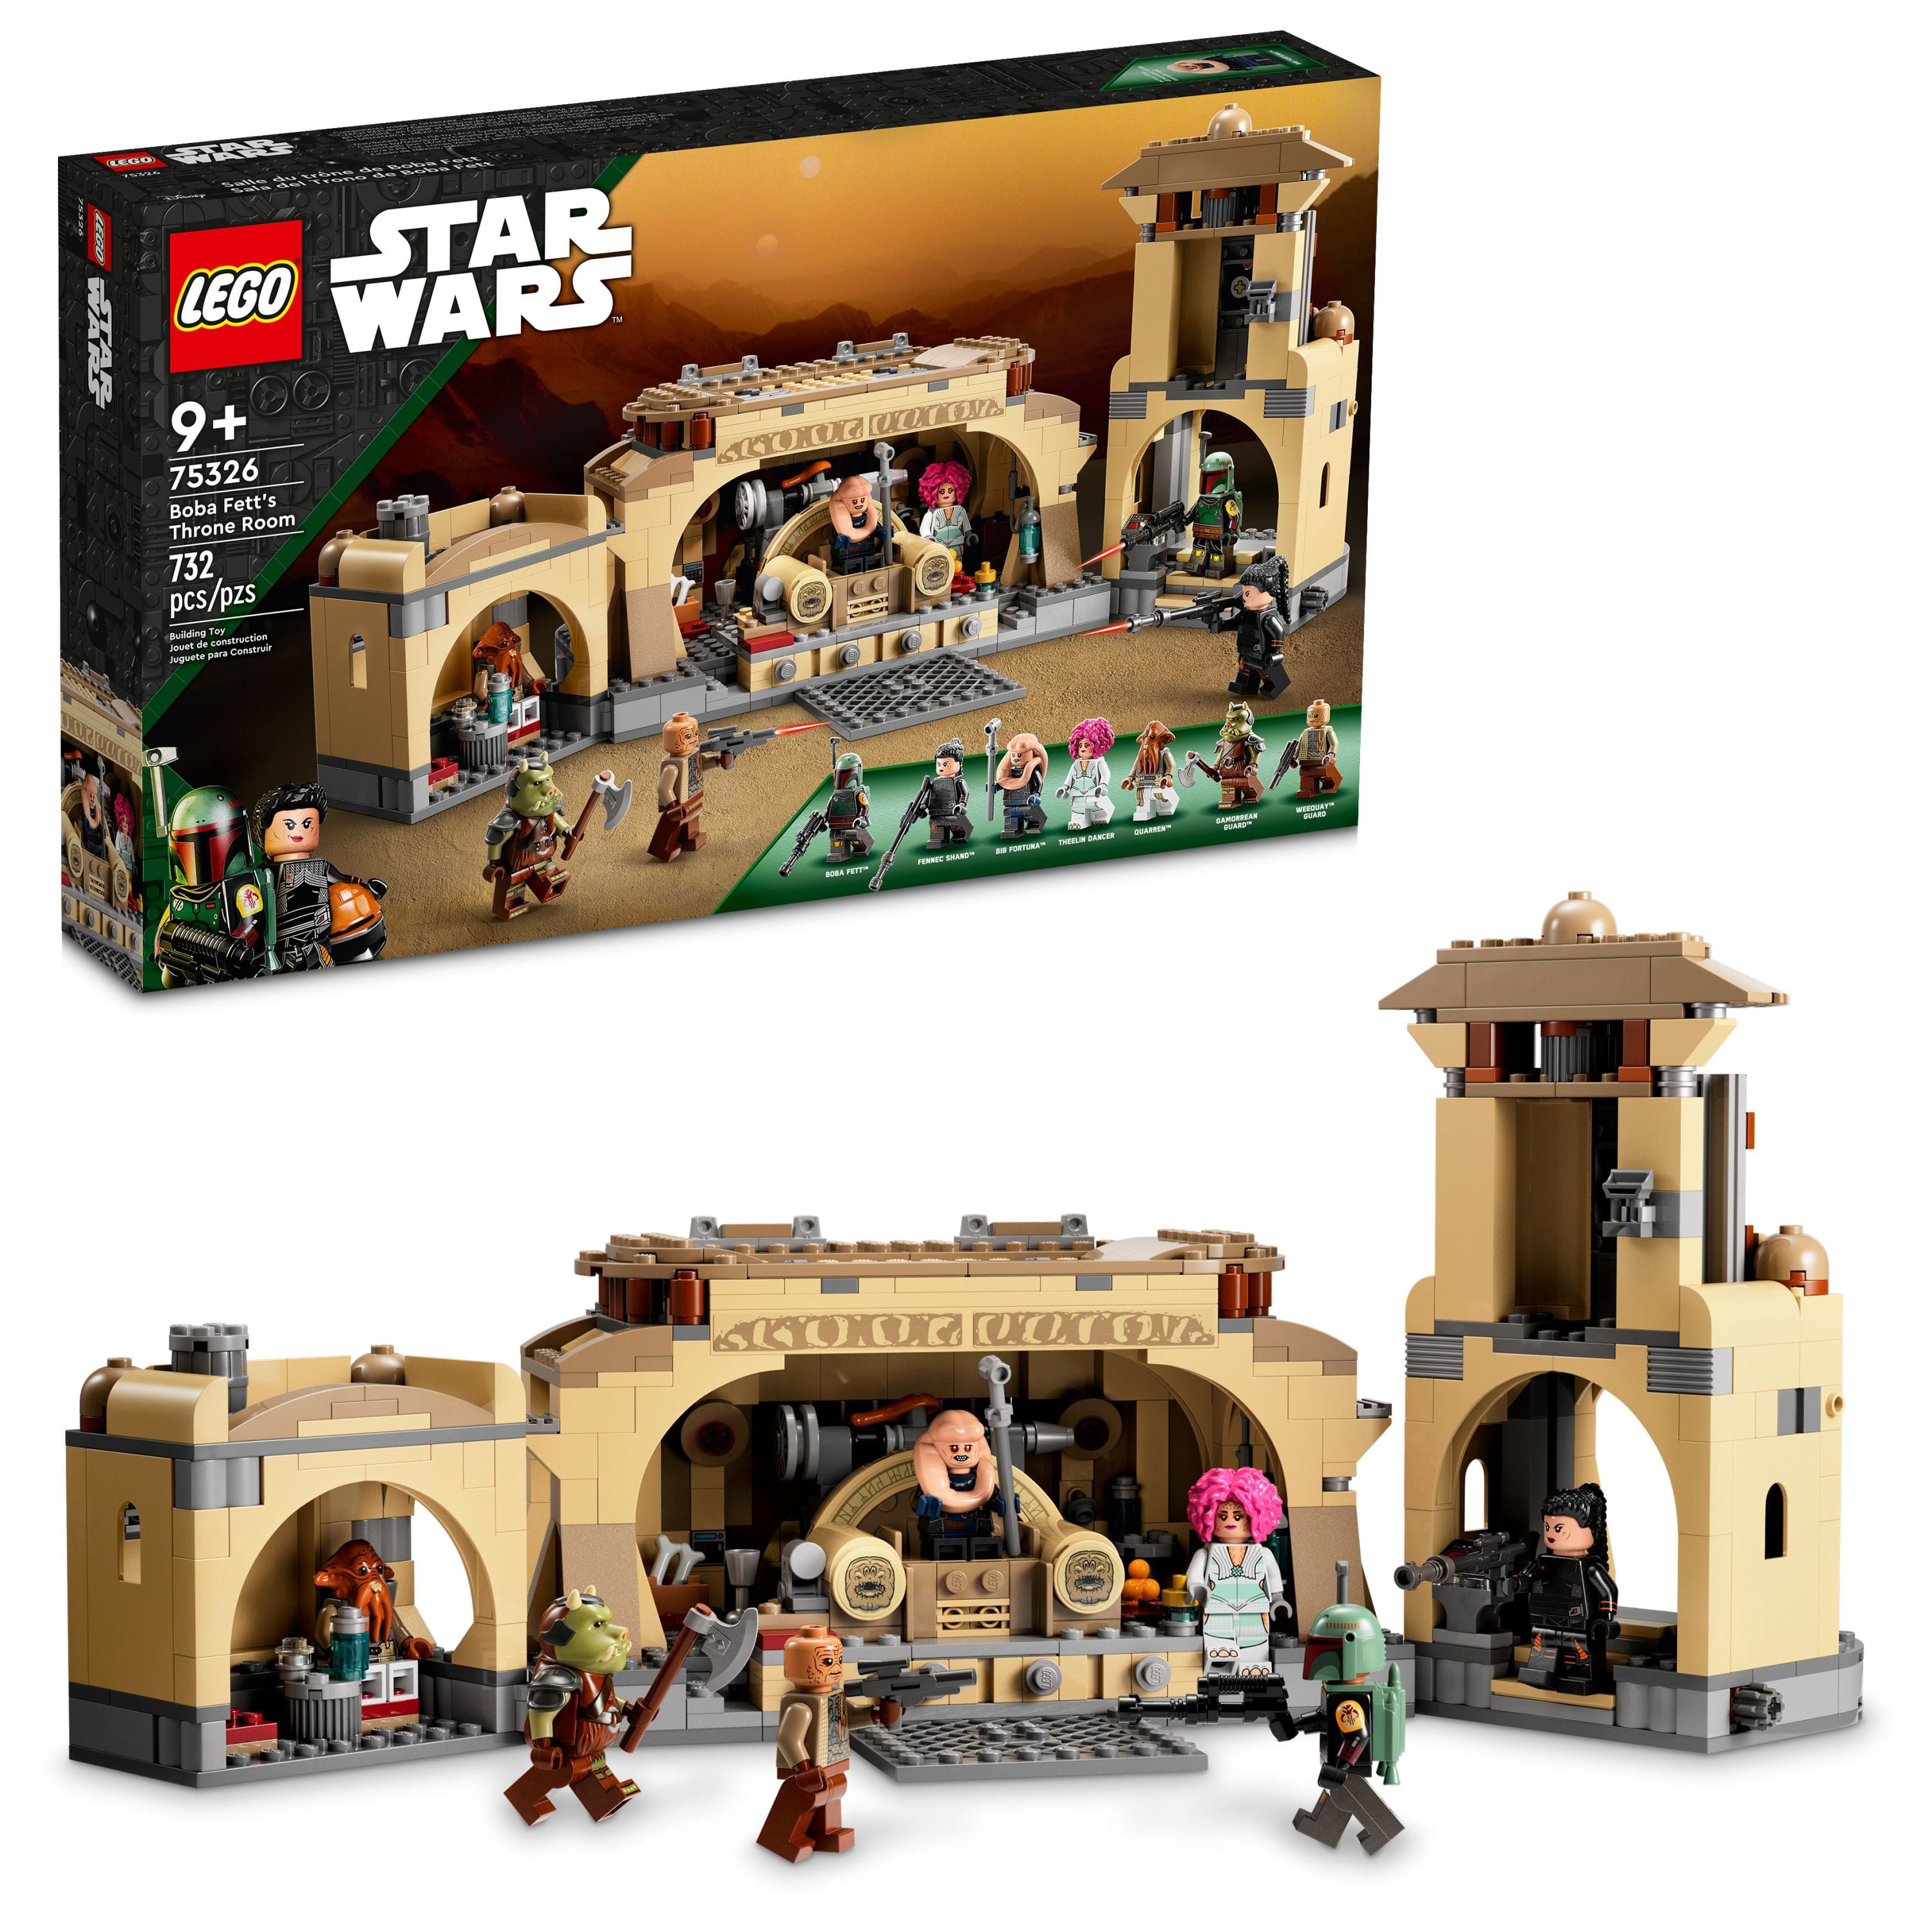 spisekammer Underholde medaljevinder 732-Piece LEGO Star Wars Boba Fett's Throne Room Building Set $70 + Free  Shipping